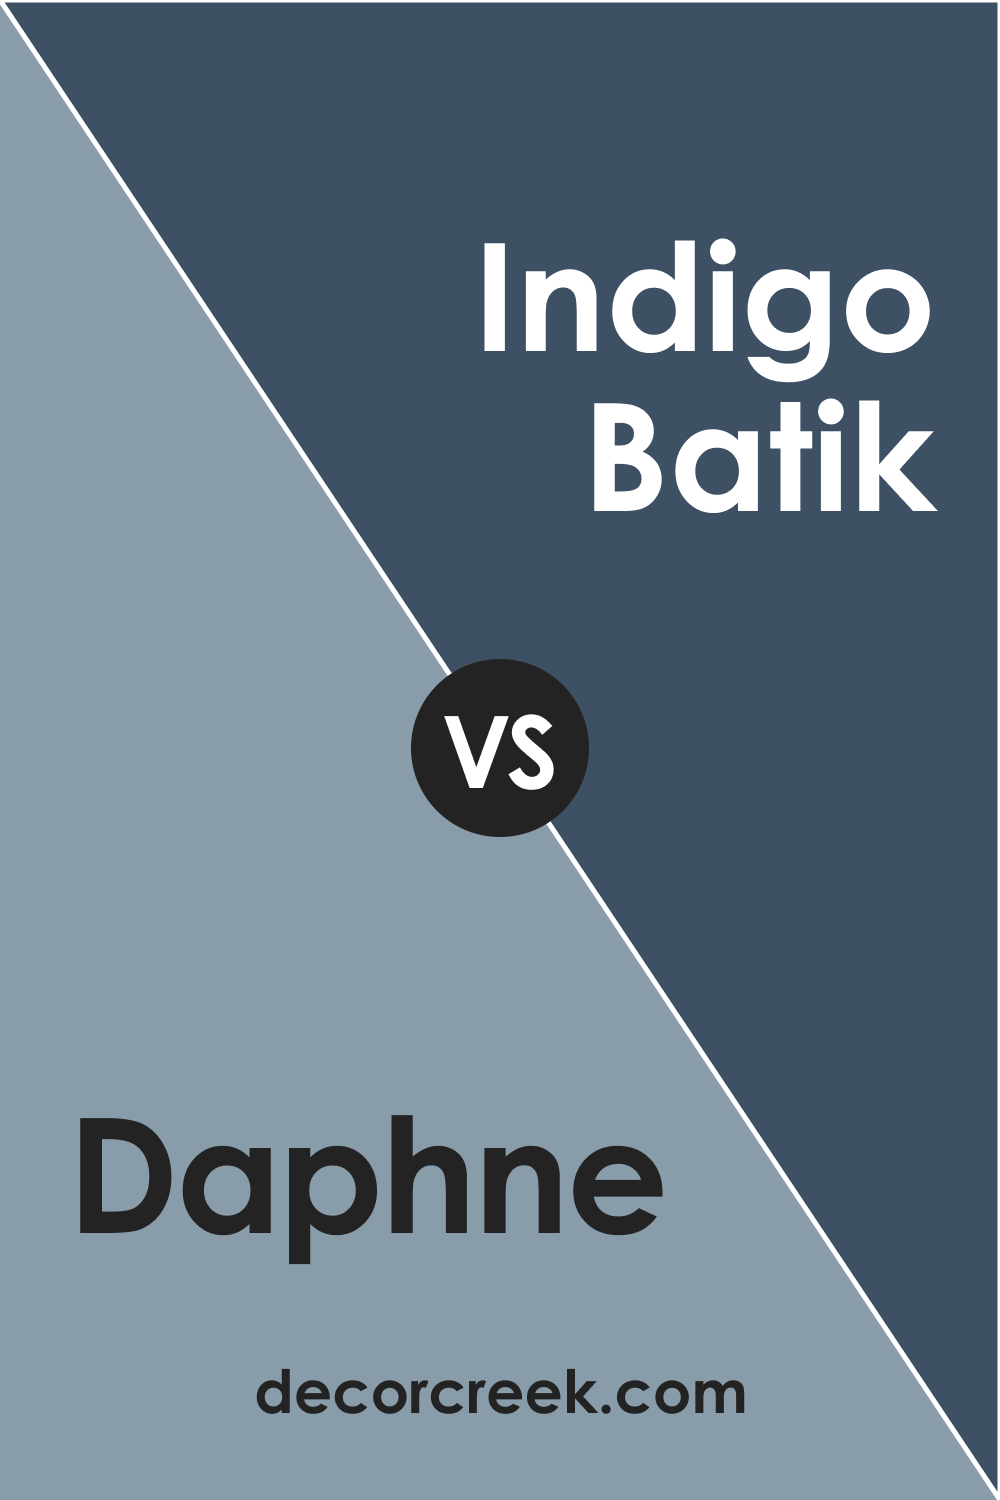 Daphne vs Indigo Batik